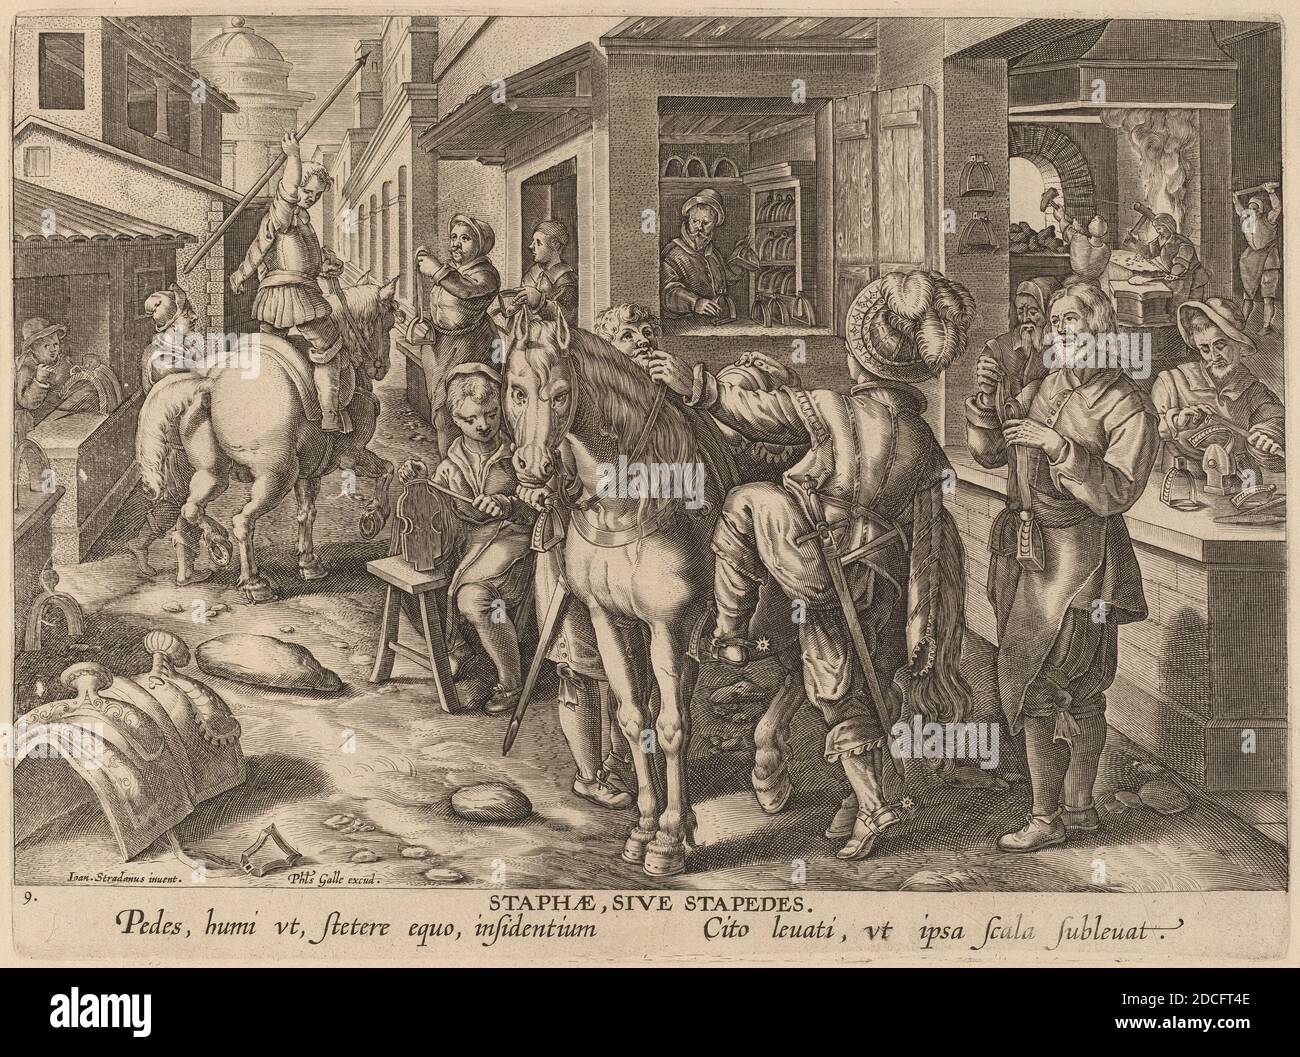 Theodor Galle, (artist), Flemish, c. 1571 - 1633, Jan van der Straet, (artist after), Flemish, 1523 - 1605, Equestrian Harnesses: pl.9, New Discoveries, (series), c. 1580/1590, engraving Stock Photo